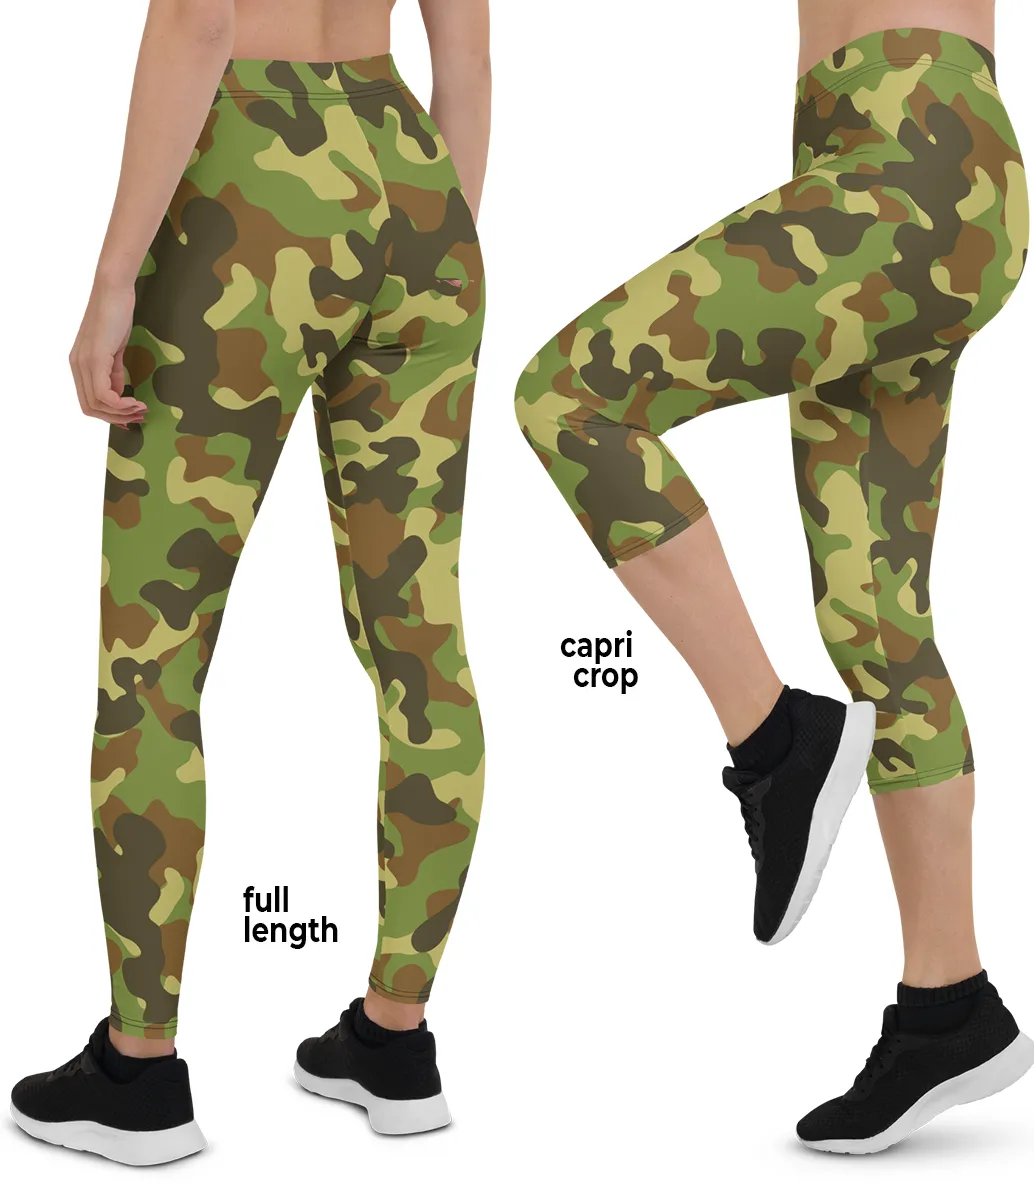 https://squeakychimp.com/wp-content/uploads/green-camouflage-leggings.webp